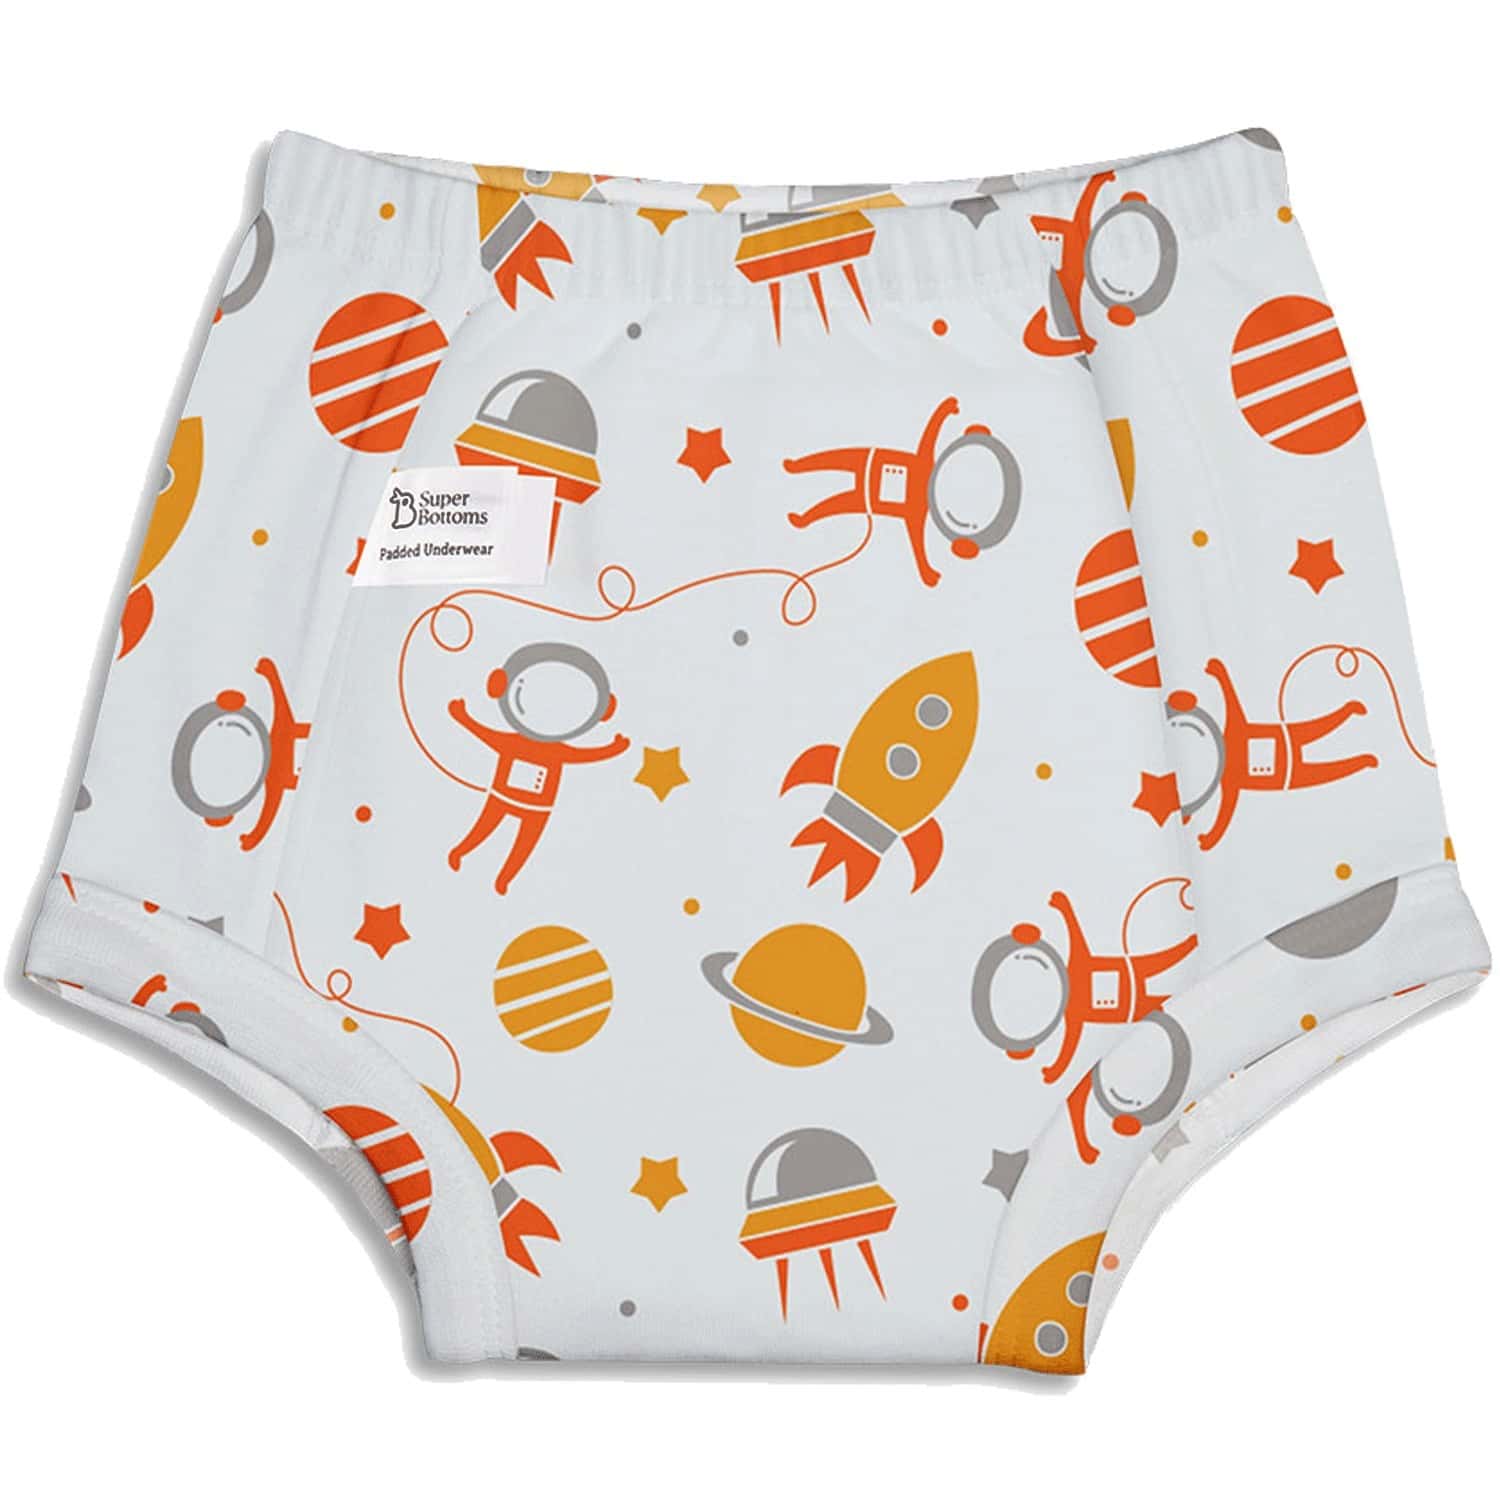 https://medanand.com/wp-content/uploads/2021/12/superbottoms-padded-underwear-pack-of-3-potty-training-pants-100-cotton-star-gazer-size-2-6.2-1632783619.jpg